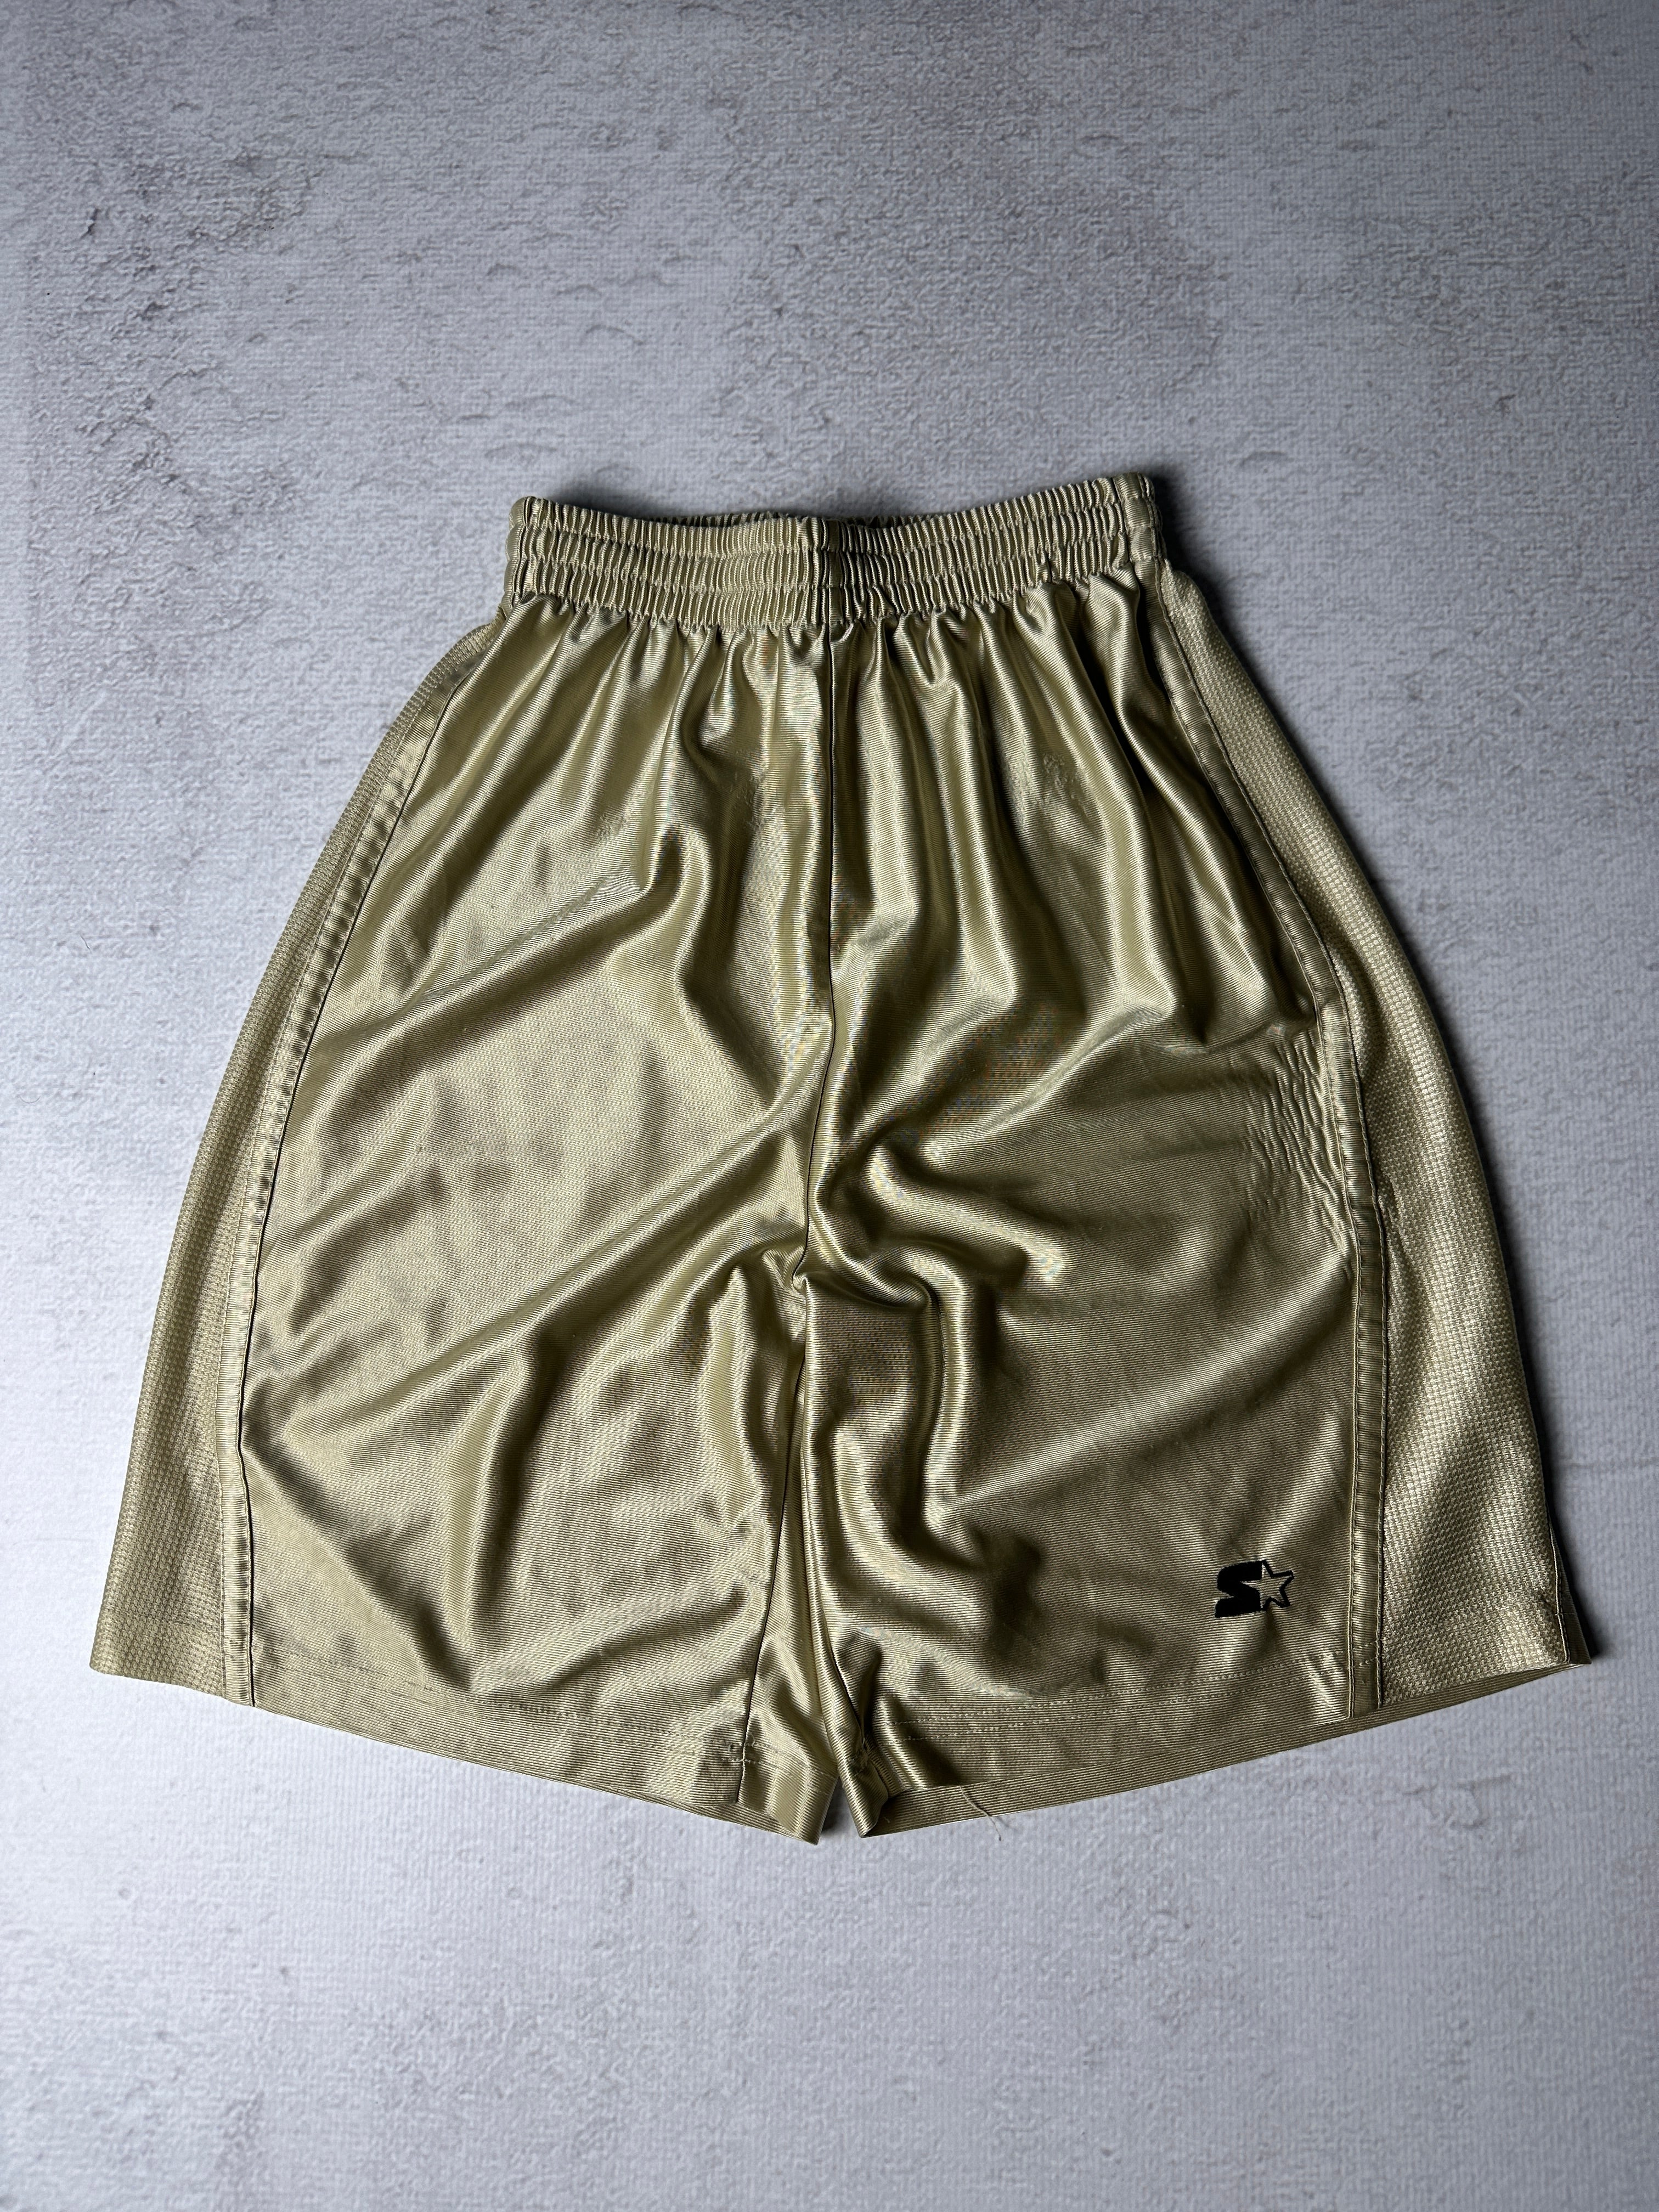 Vintage Starter Track Shorts - Men's Small